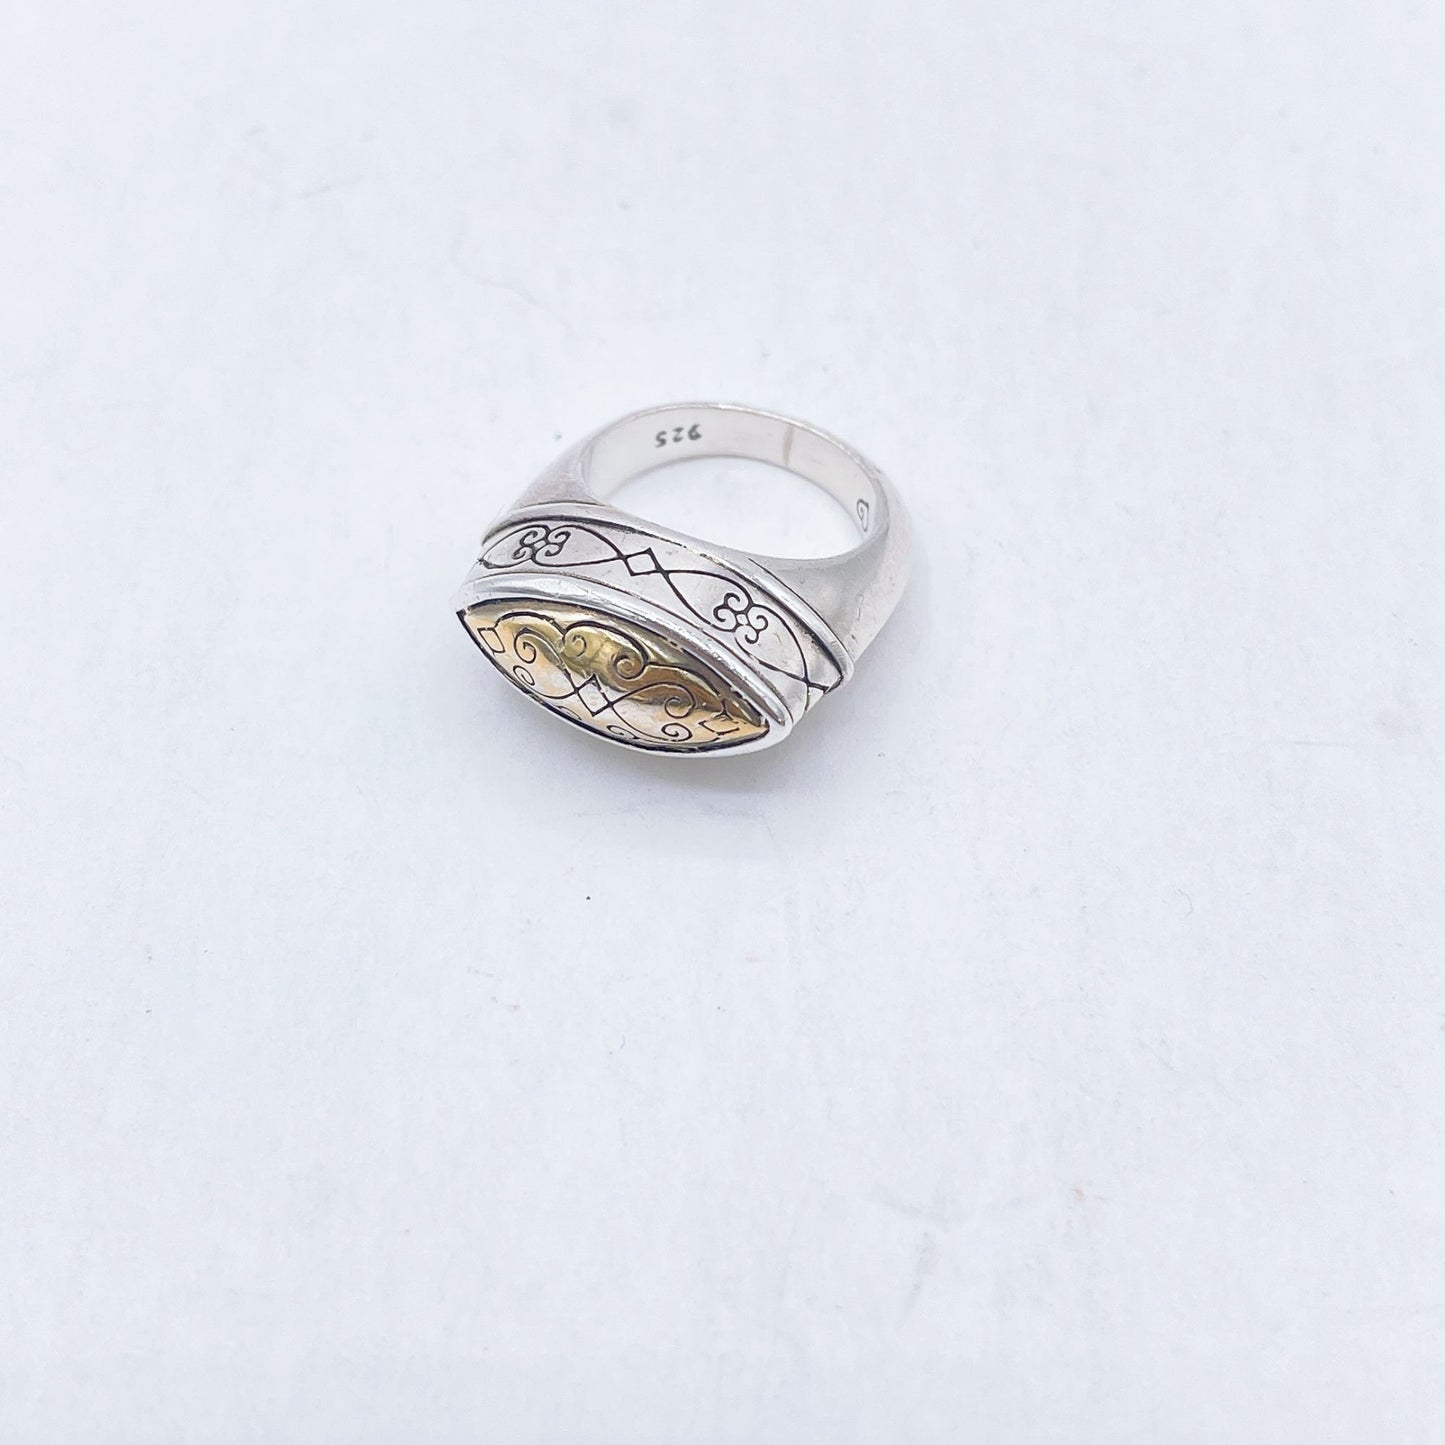 Brighton 925 & Gold Vintage Rare Find Ring - Size 6.5